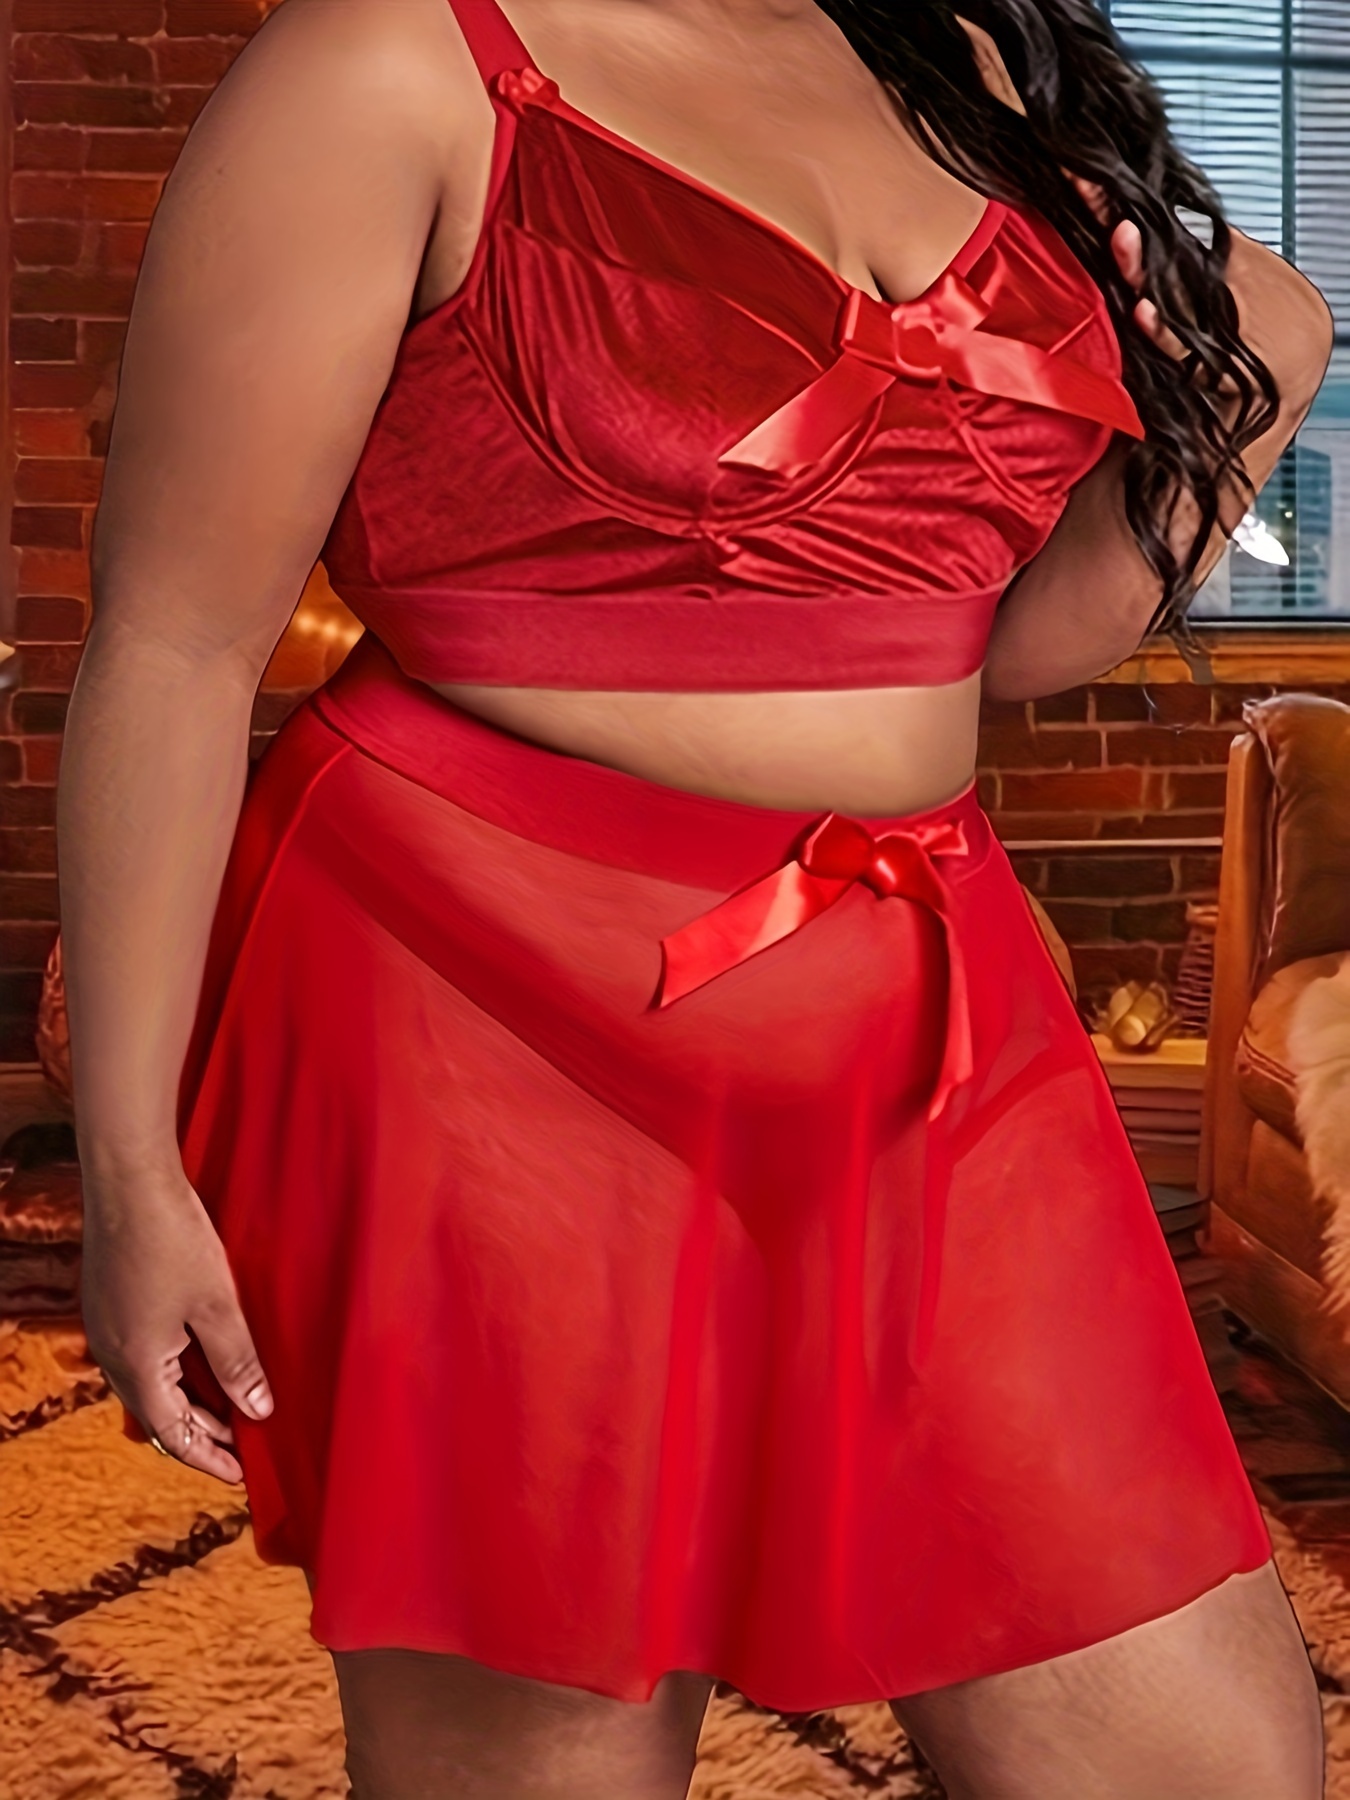 Lingerie Red Fasion Women Festival Bowknot Christmas Backless Bodysuit  Pregnancy Lingerie Fasion plus Size